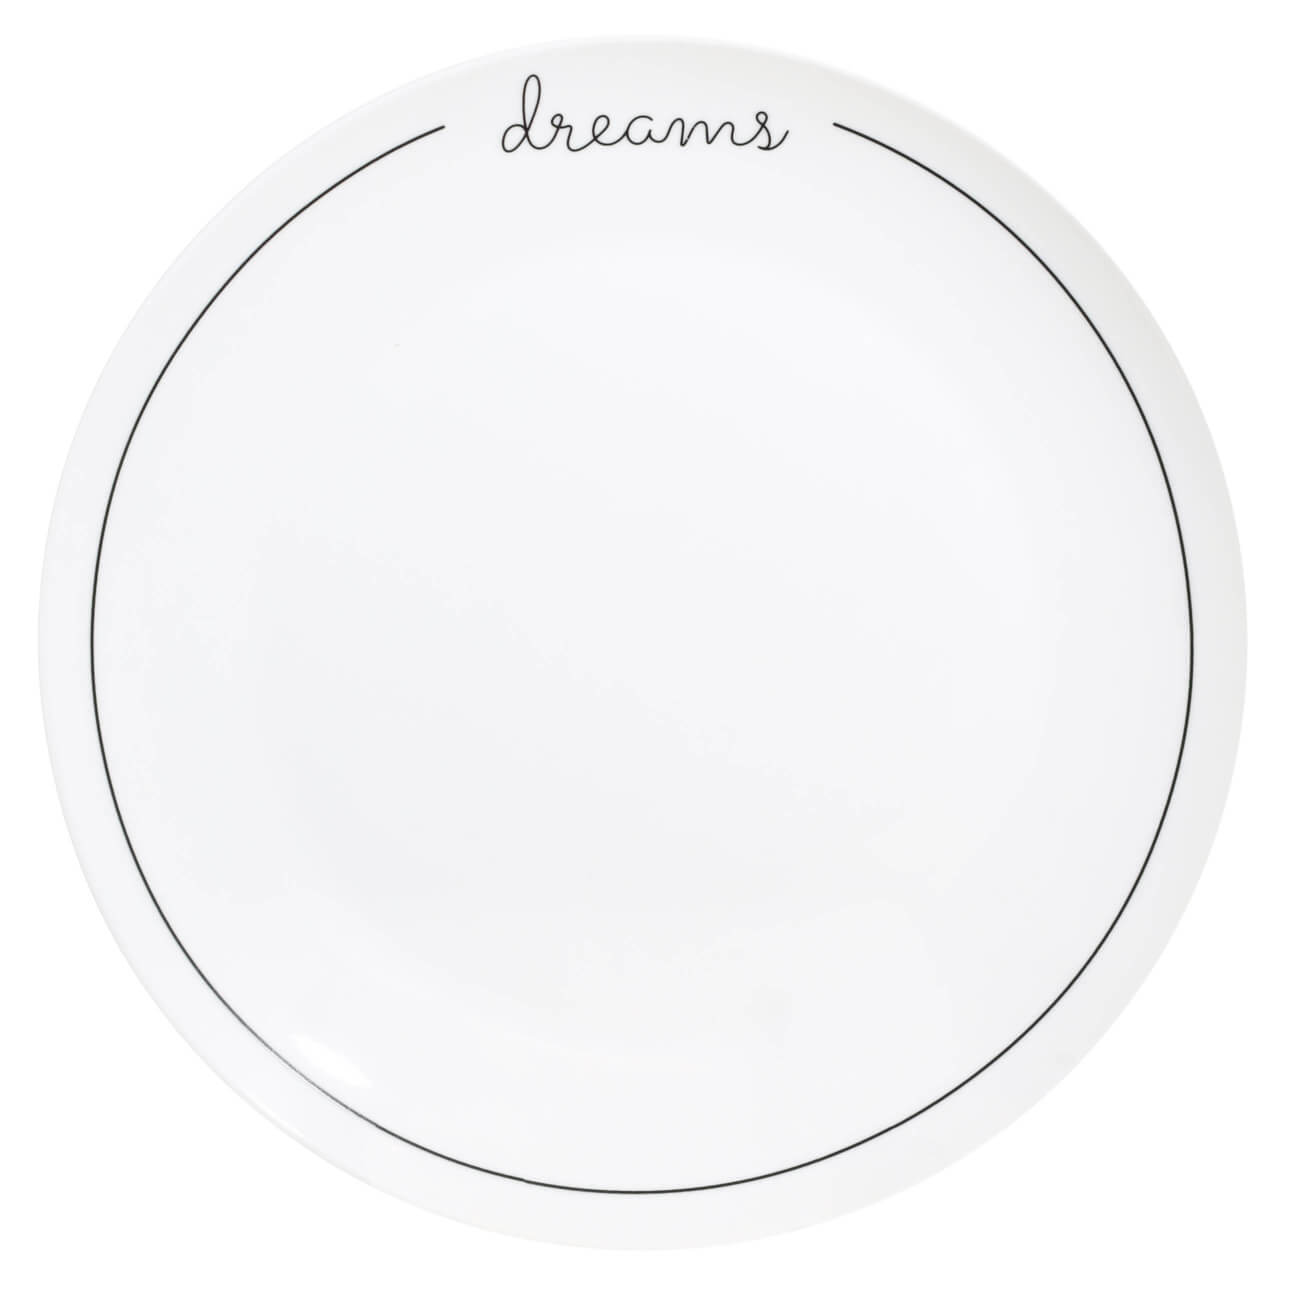 Тарелка обеденная, 27 см, фарфор N, белая, Dreams, Scroll white тарелка dudson камелот 22 9 см